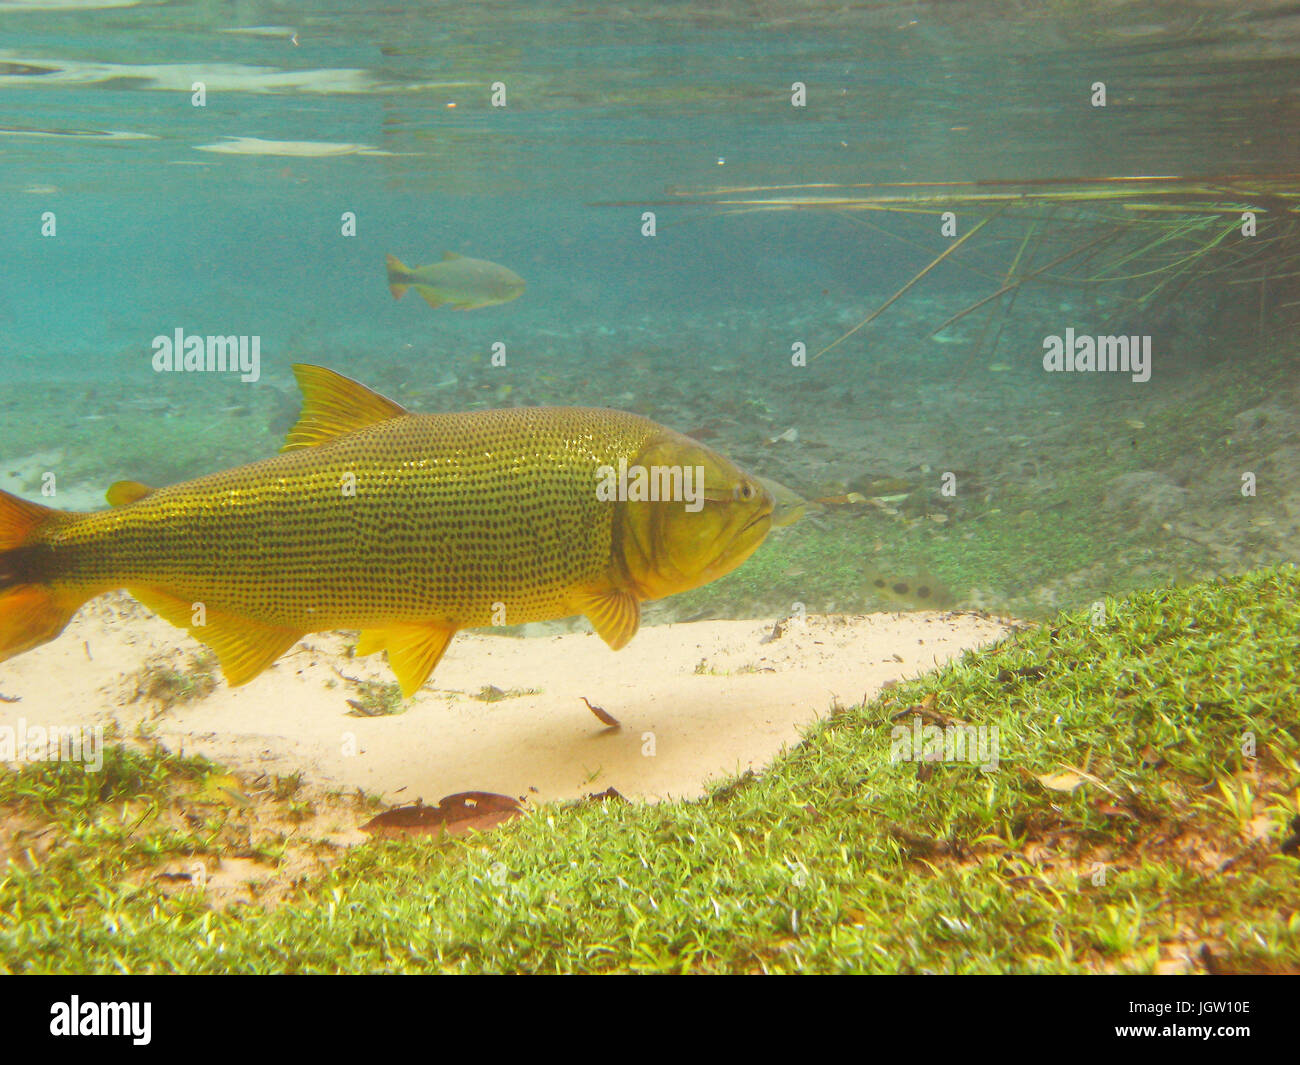 Fish, Dourado, Salminus brasiliensis, Bonito, Mato Grosso do Sul, Brazil Stock Photo